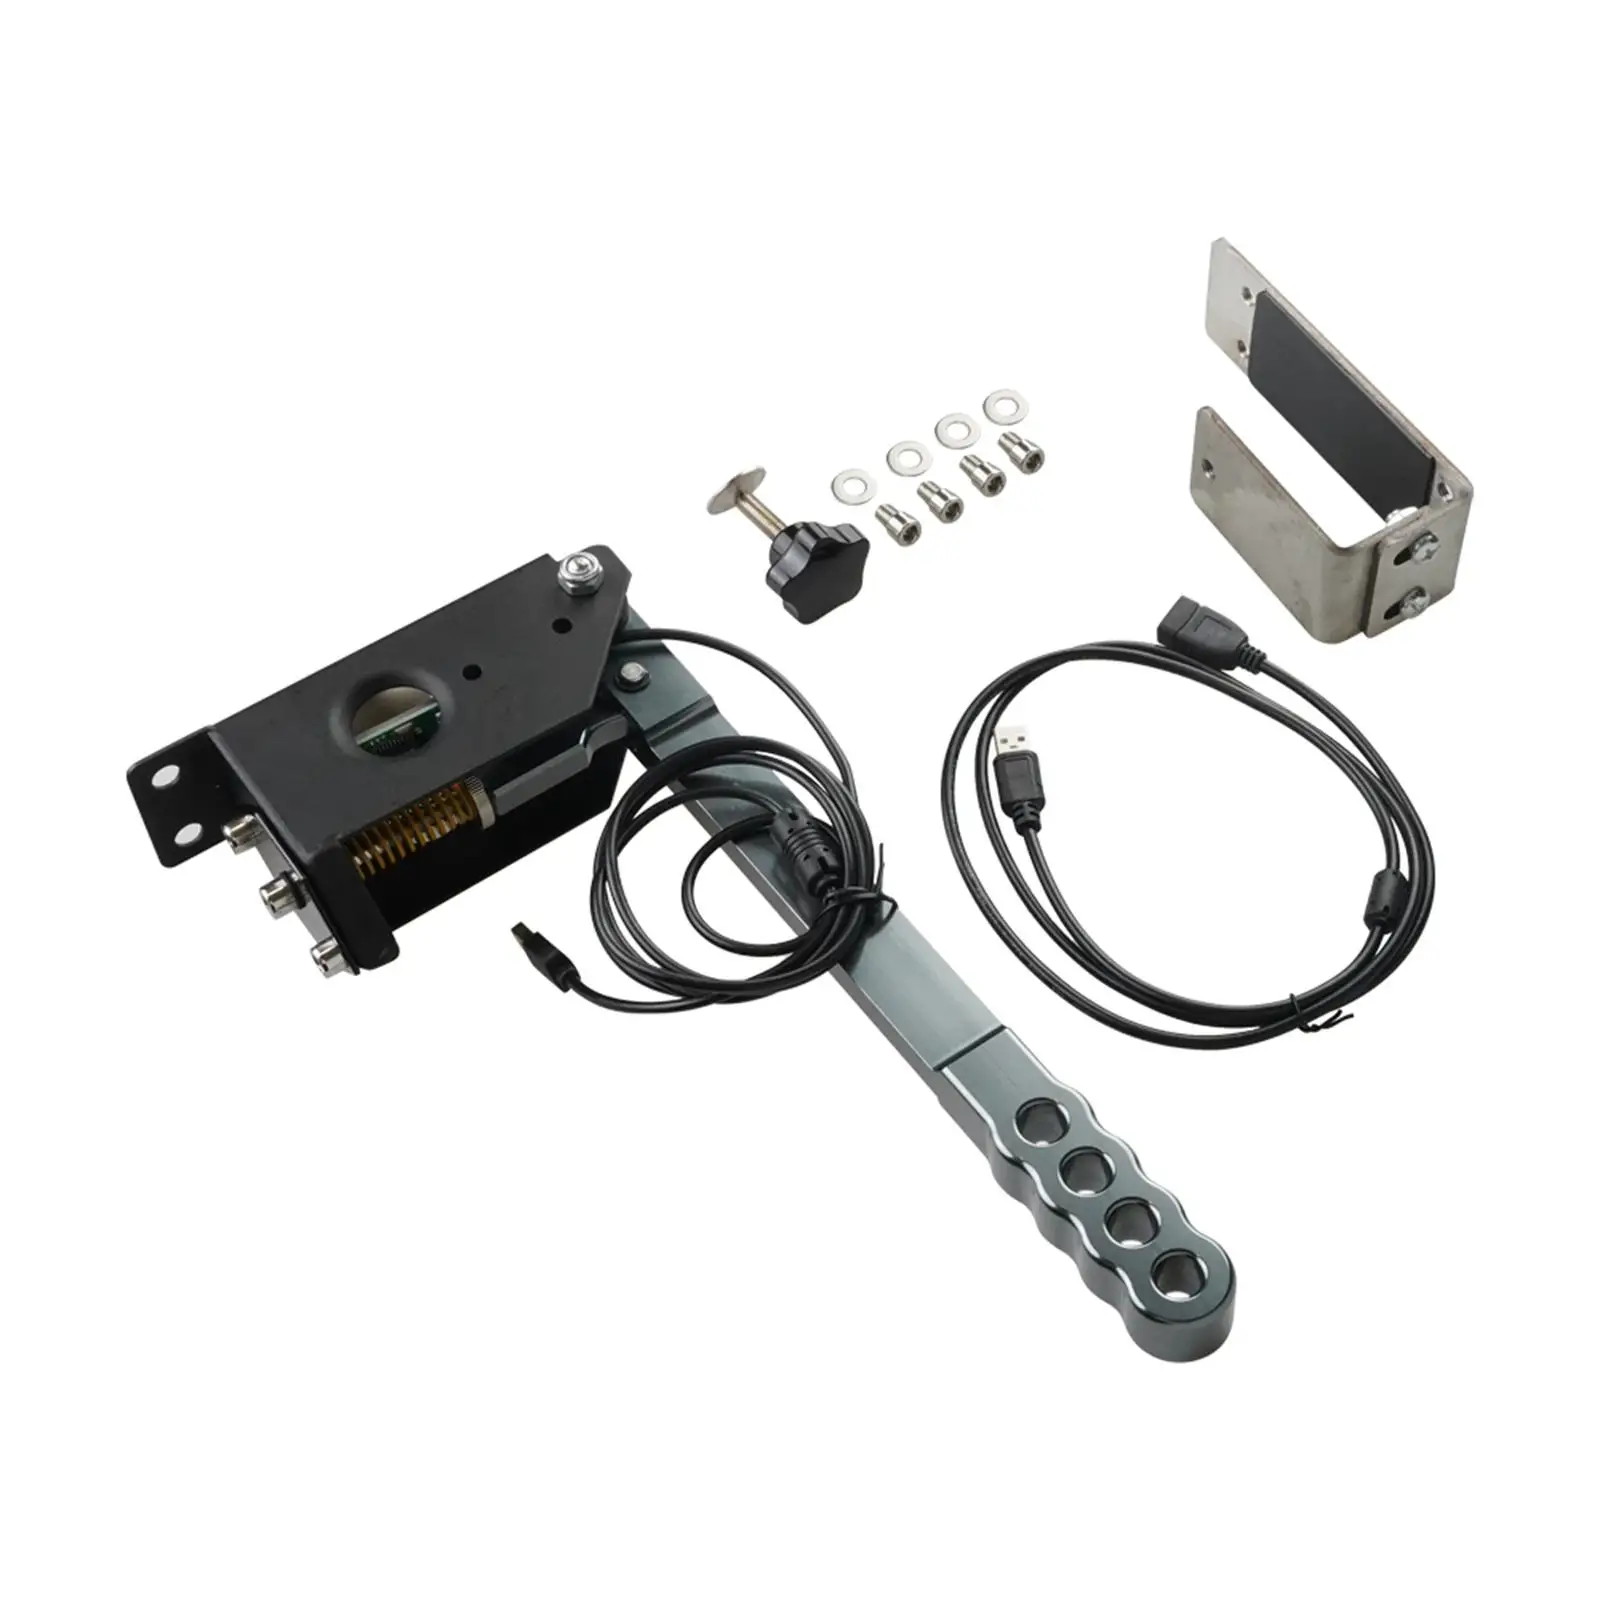 Handbrake with Fixing Clip Adjustable Professional 14 Bit Hall Sensor USB for Logitech G29 G27 G25 PC